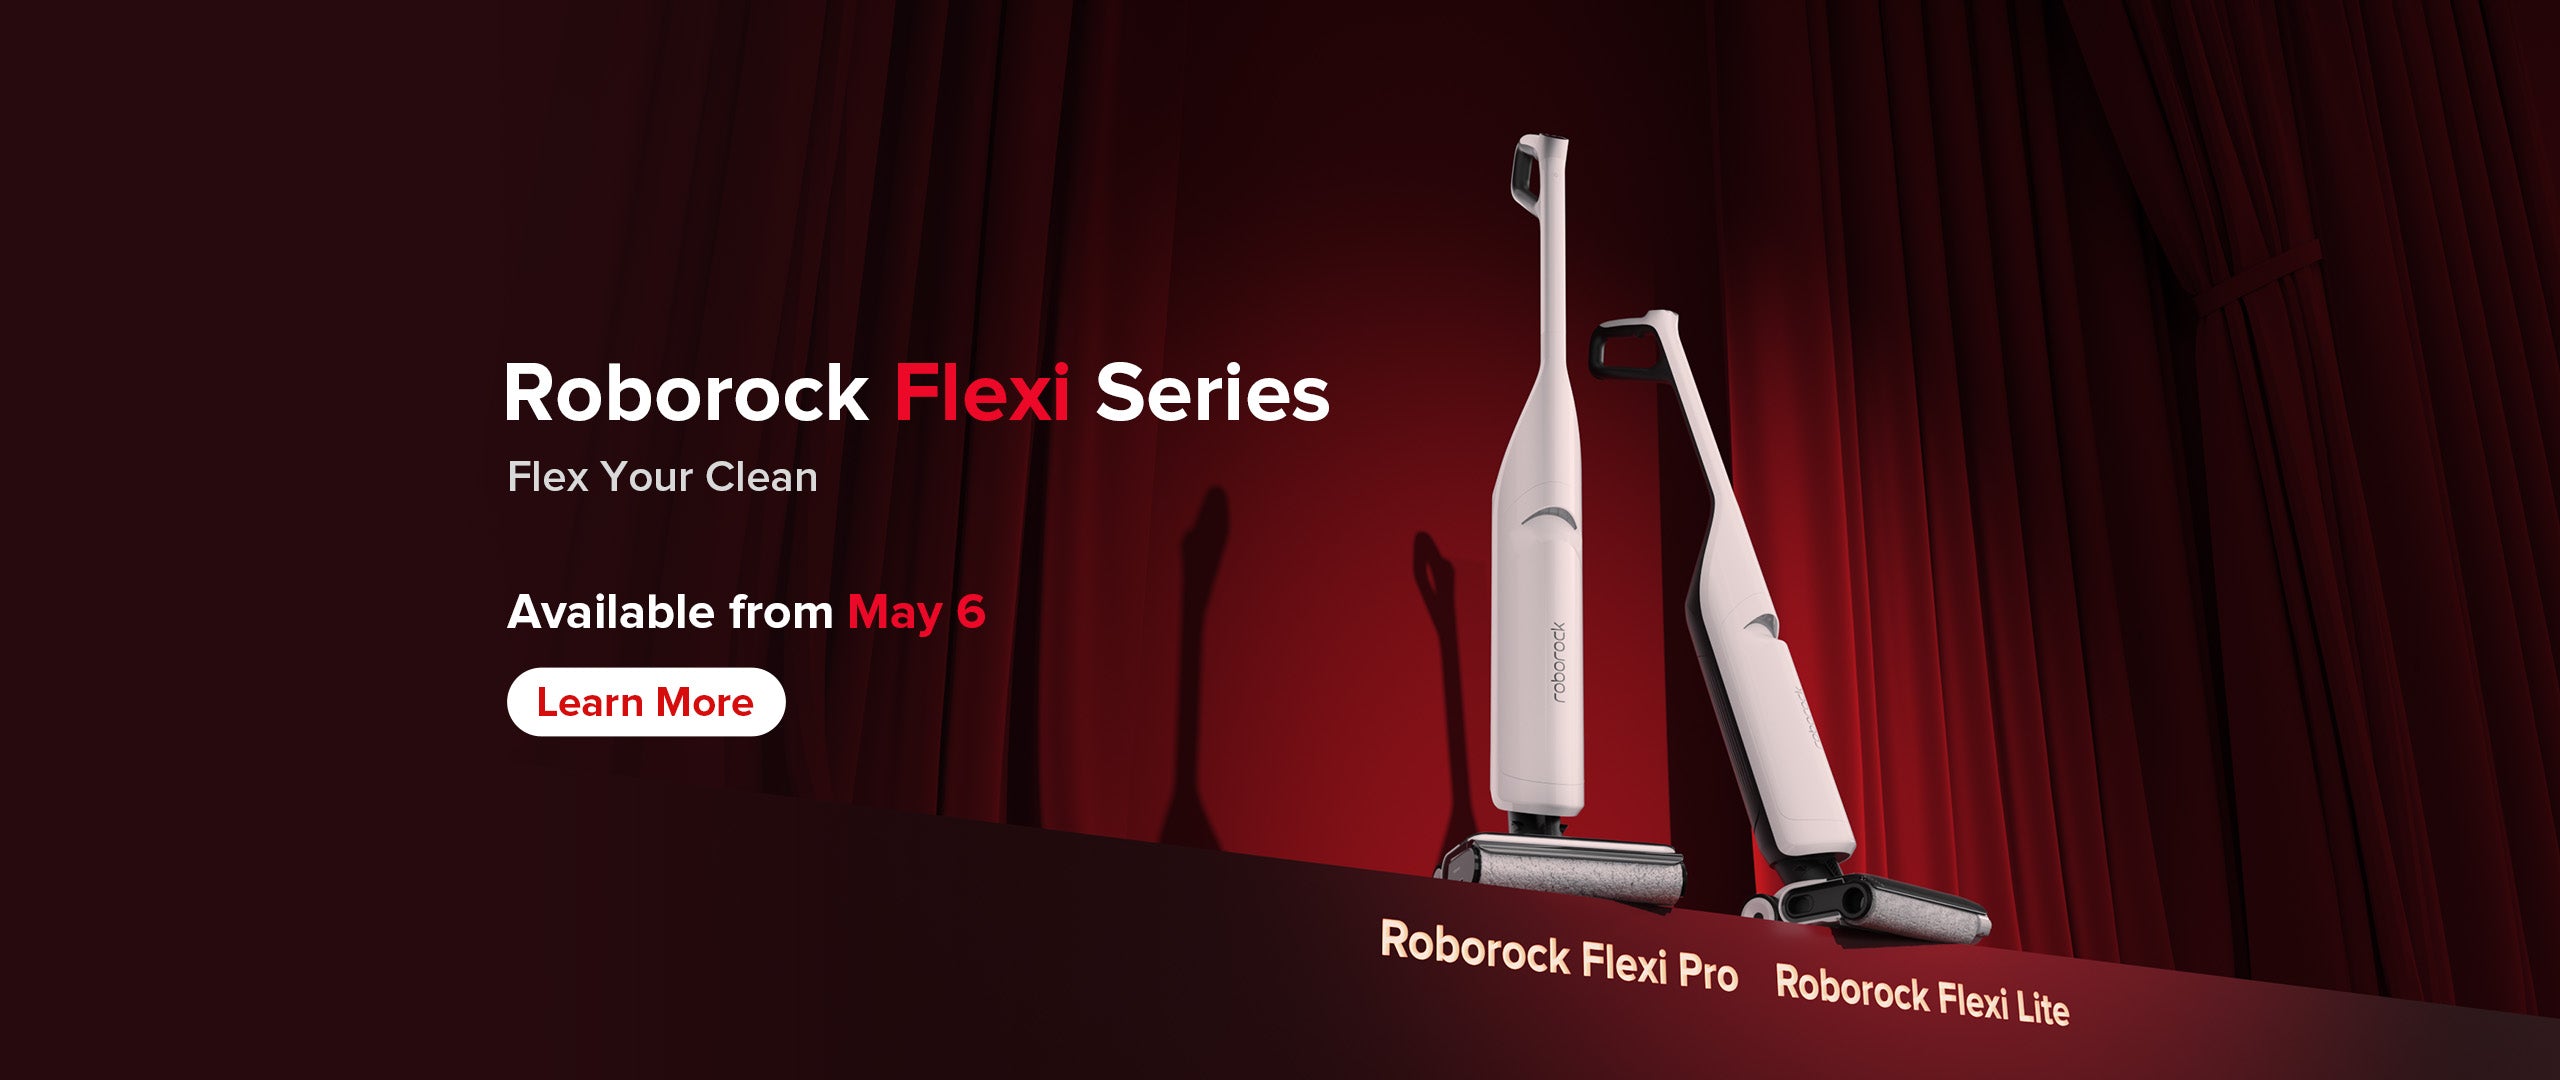 Roborock Flexi Series Warm Up